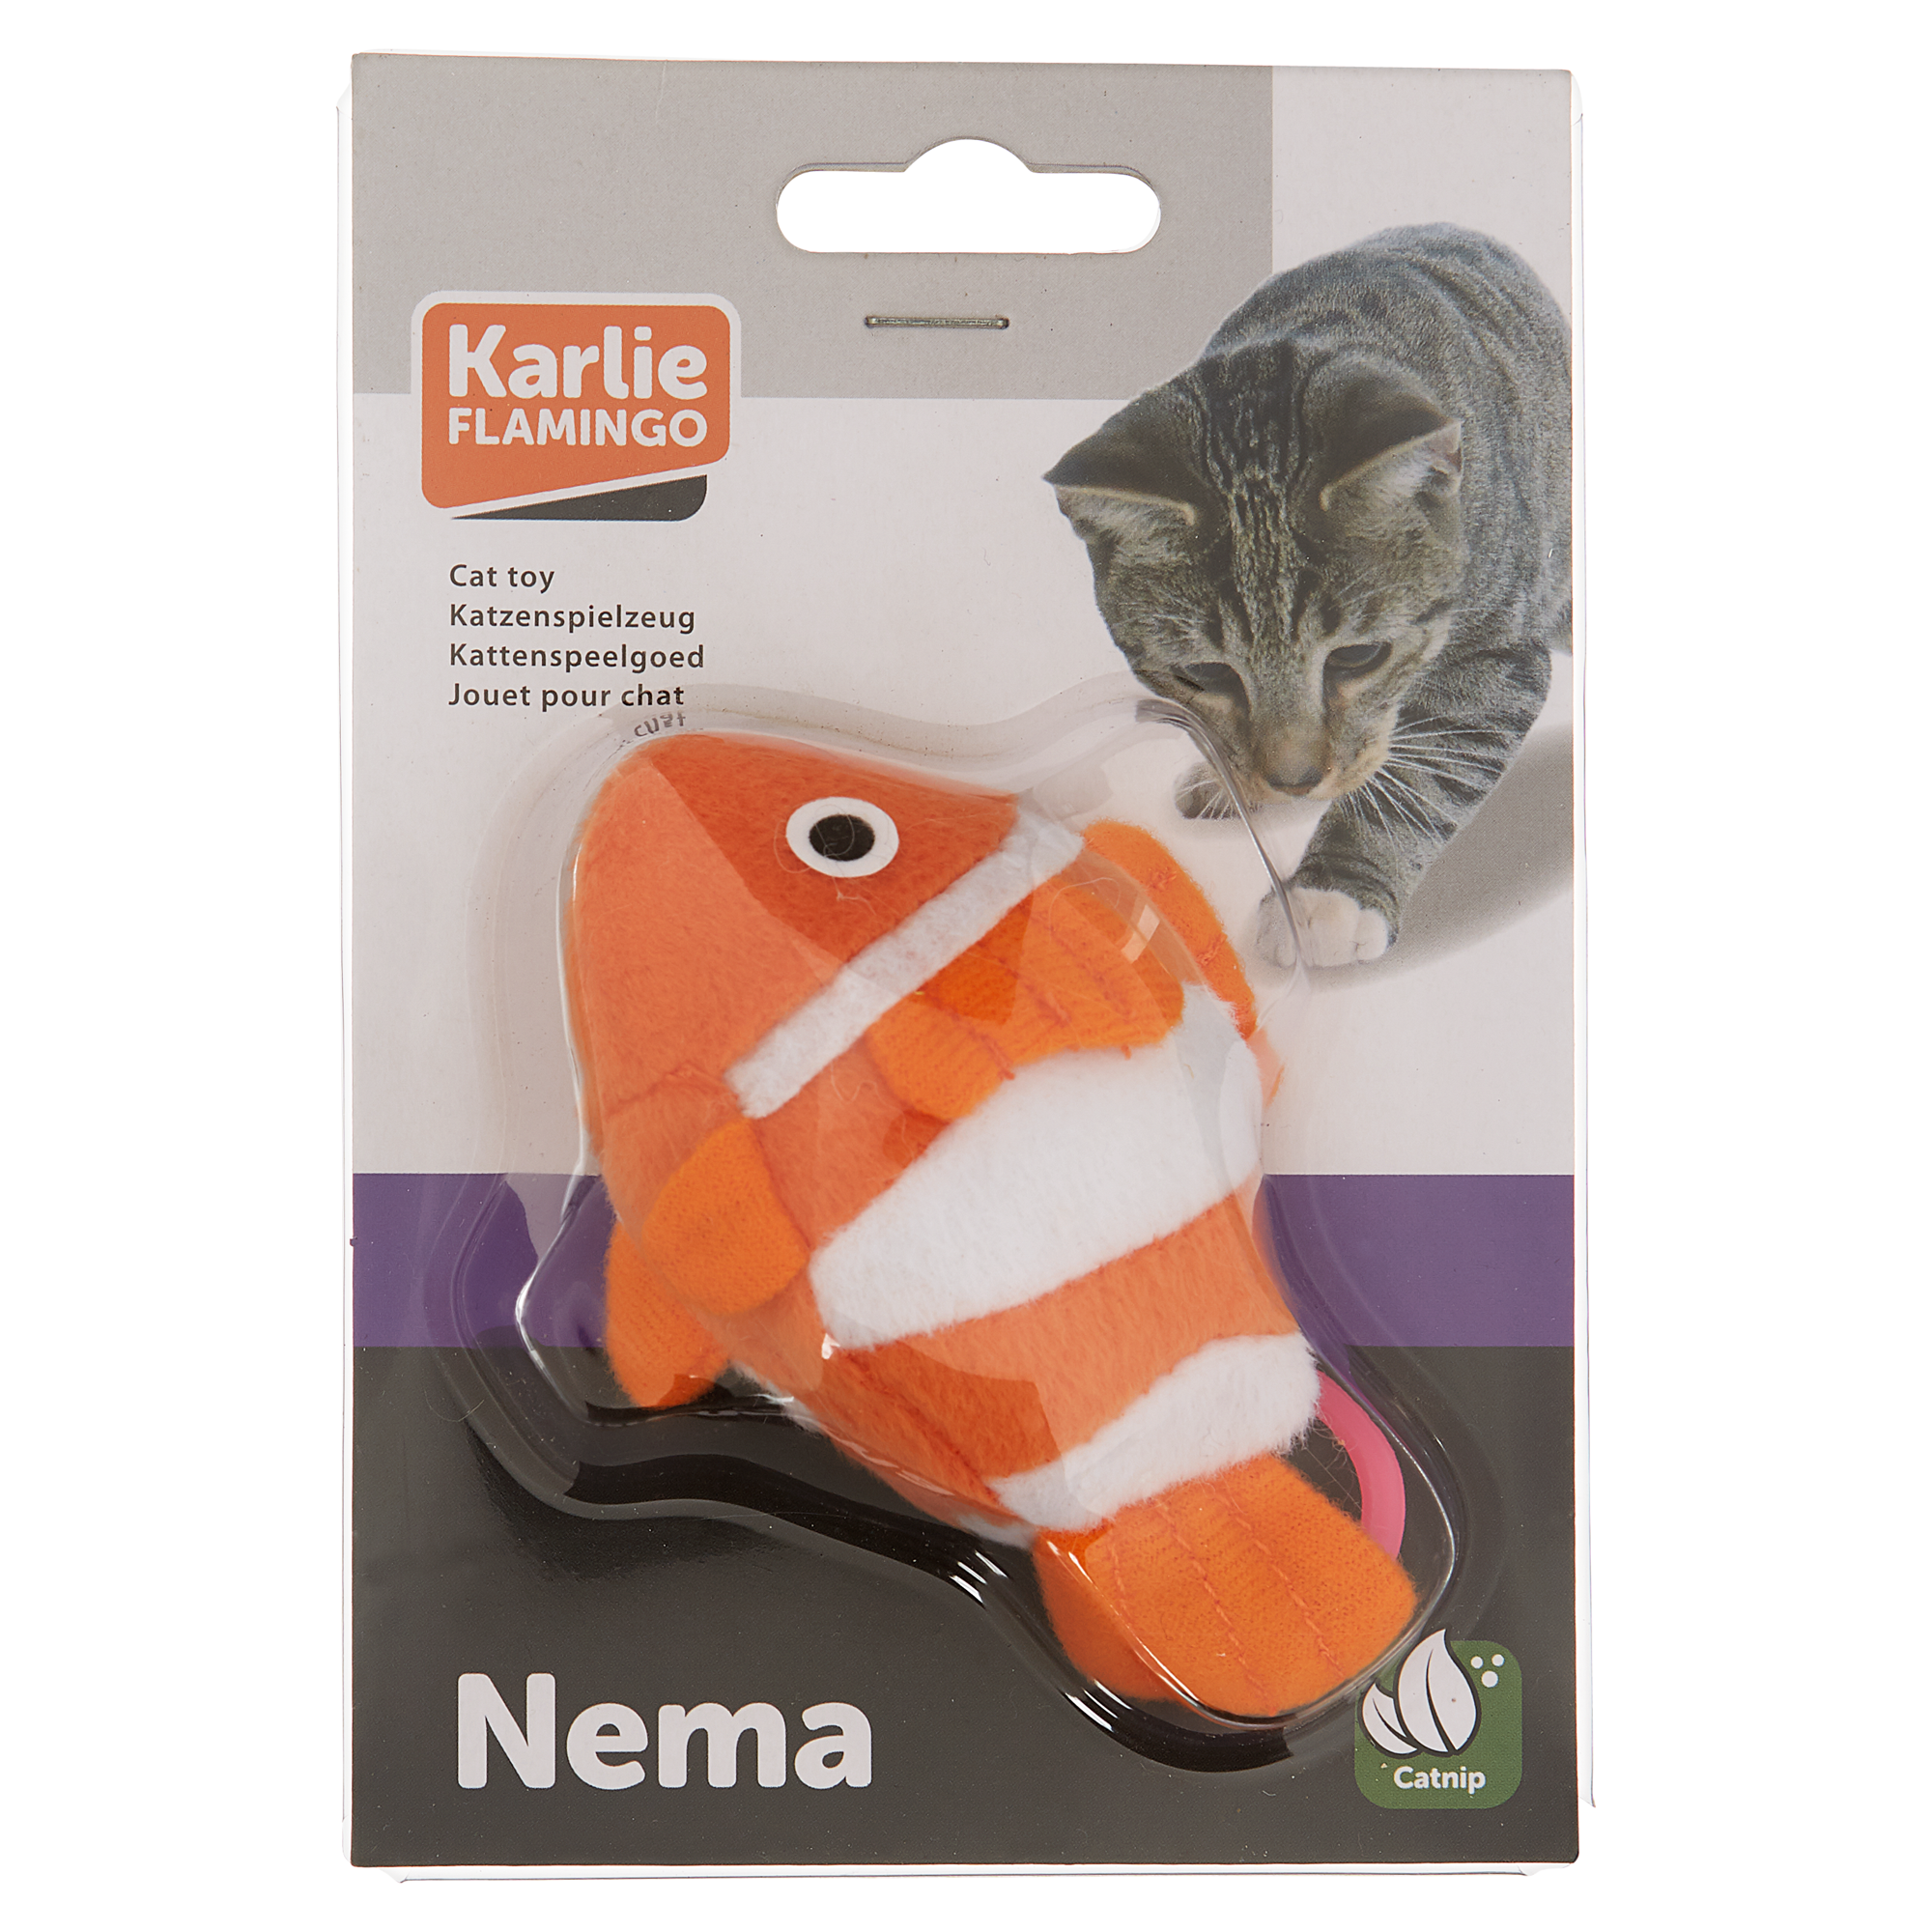 Katzenspielzeug "Nemo” + product picture